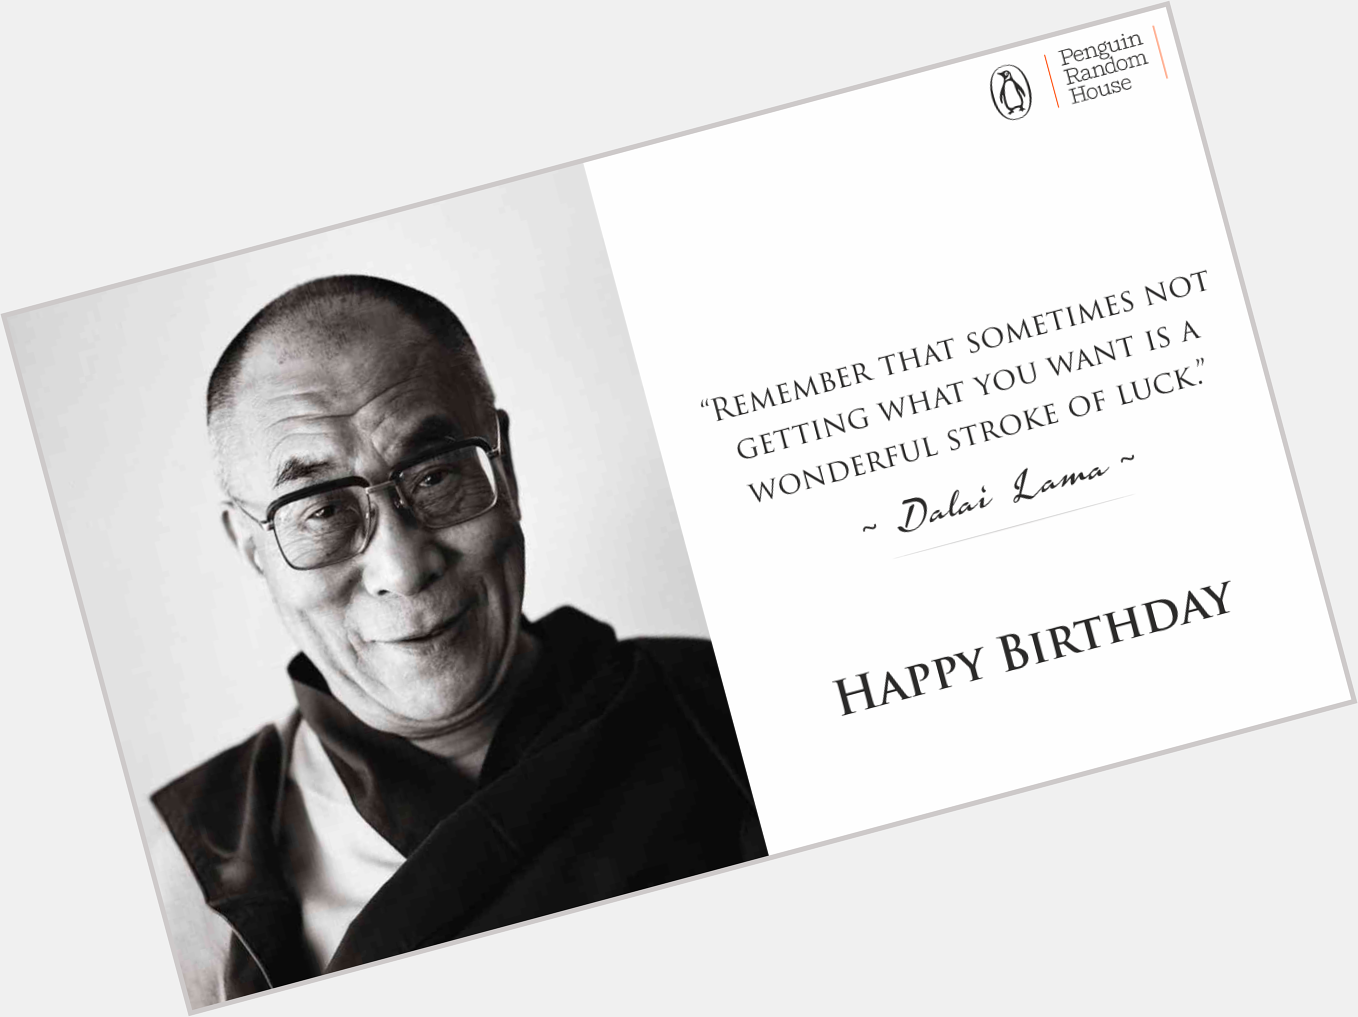 Wishing the Dalai Lama many happy returns of his 80th birthday! 